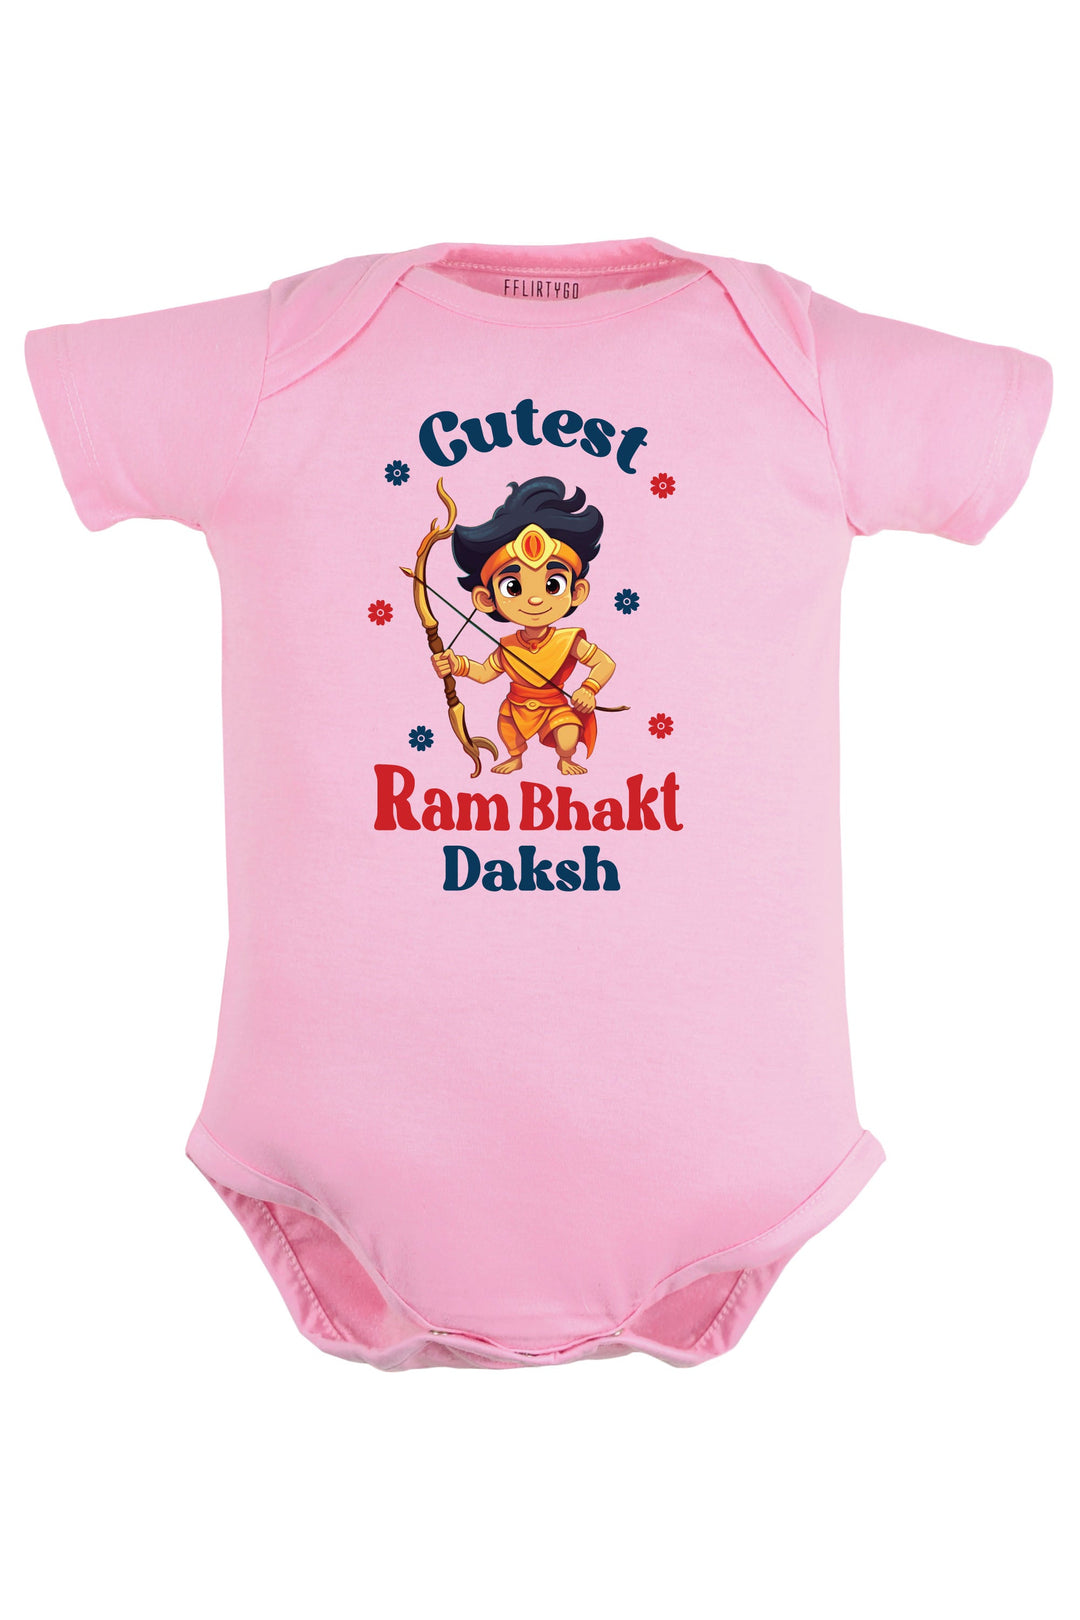 Cutest Ram Bhakt Baby Romper | Onesies w/ Custom Name